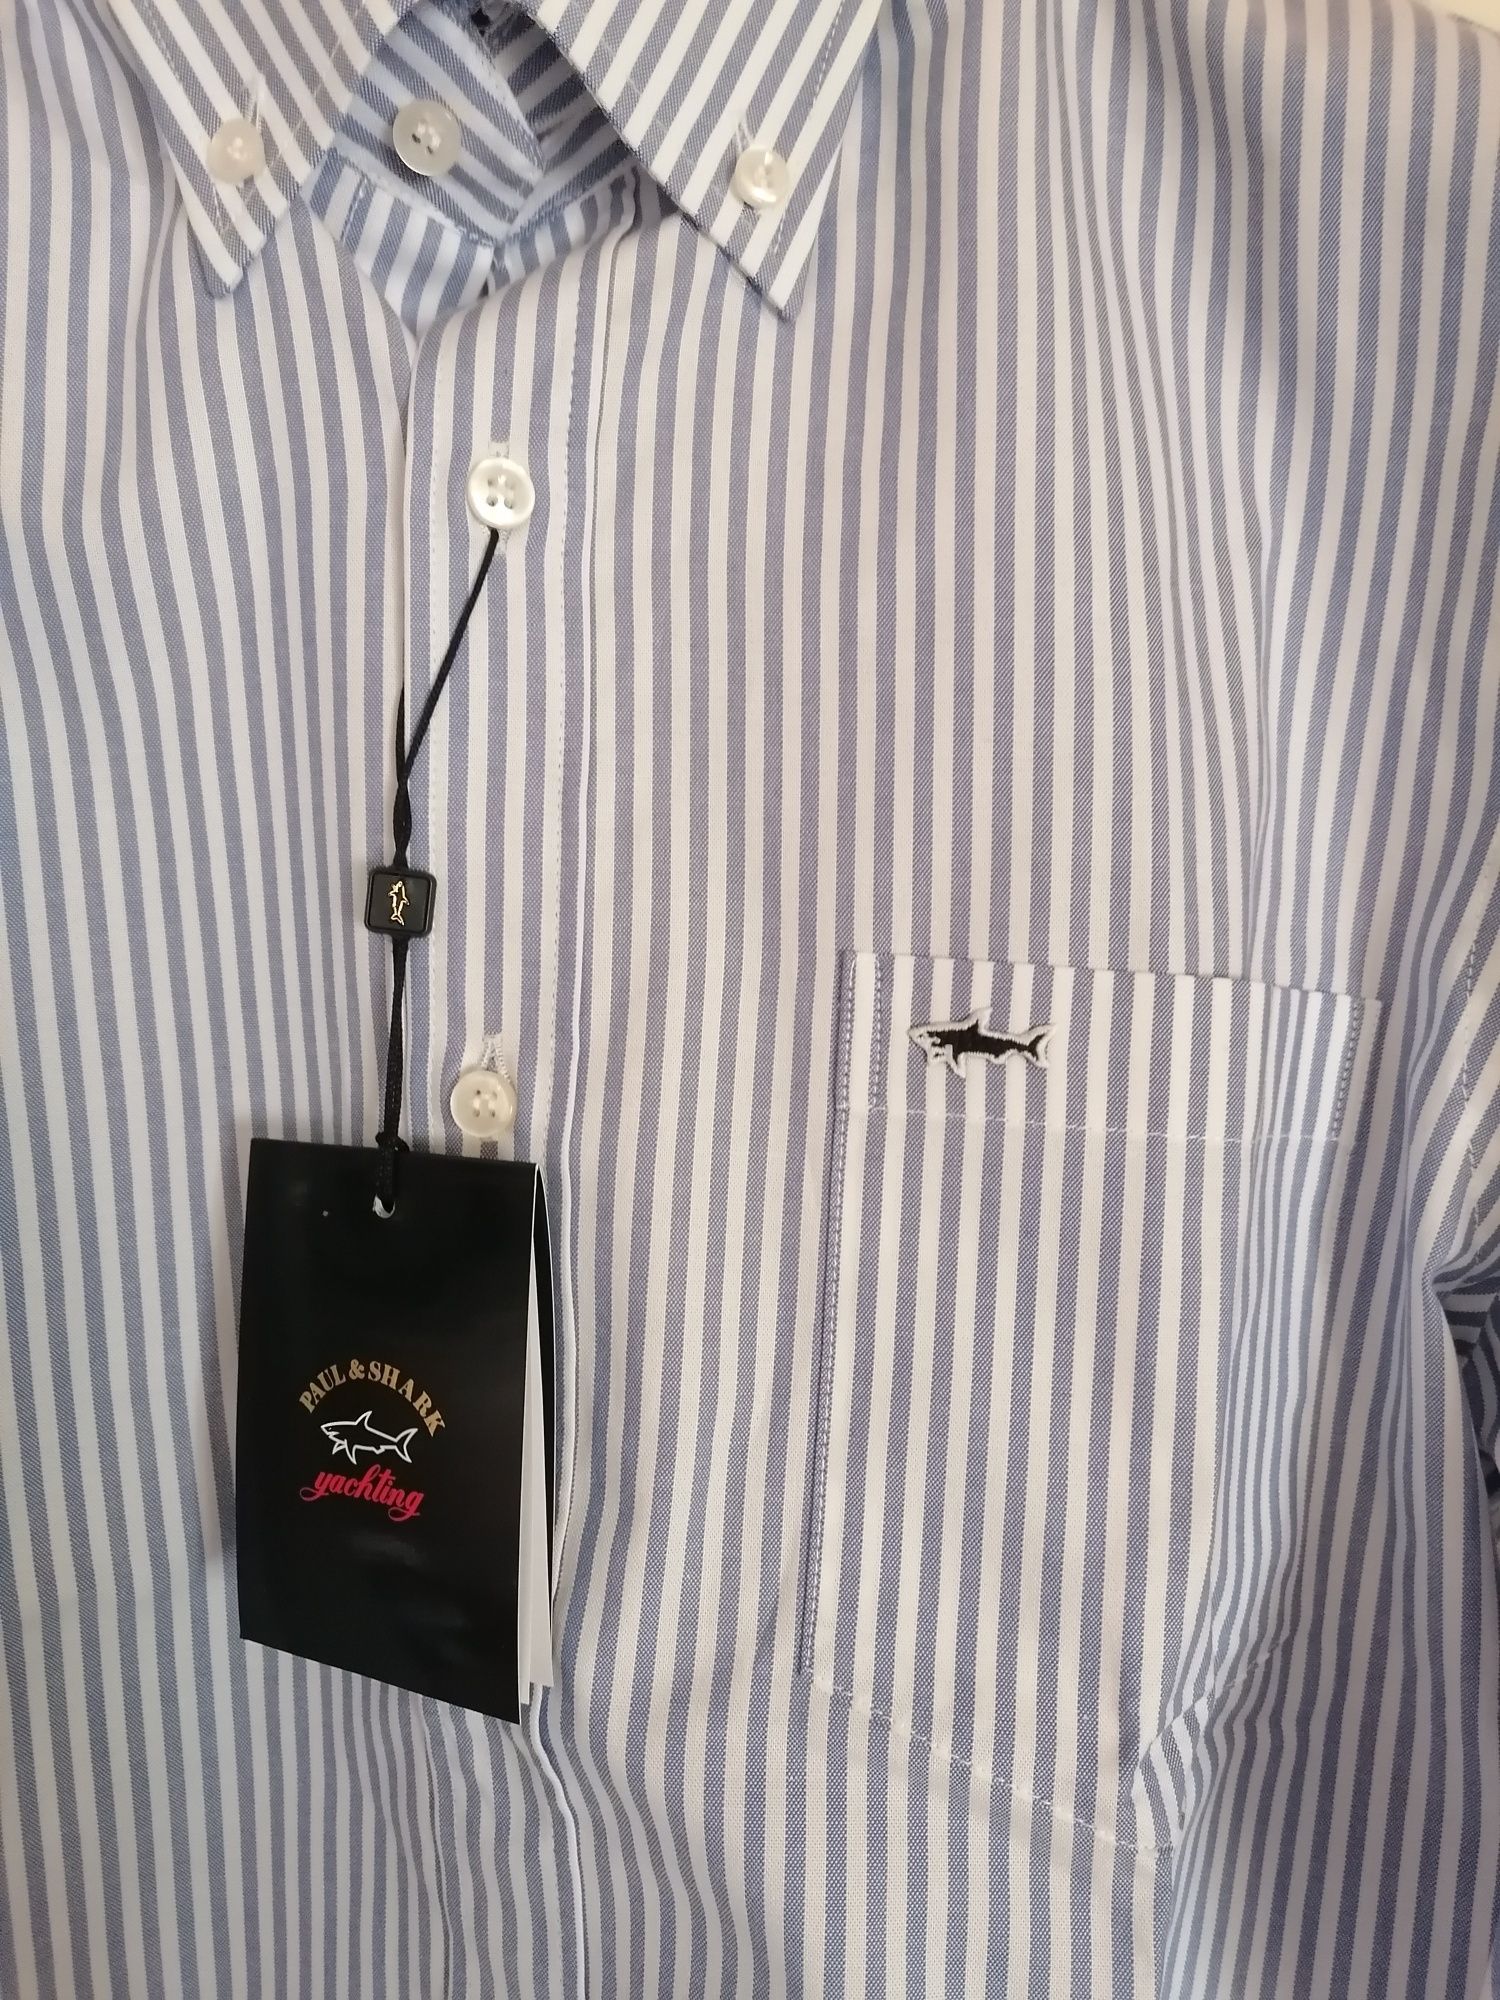 Paul&Shark, camisa clássica com etiqueta